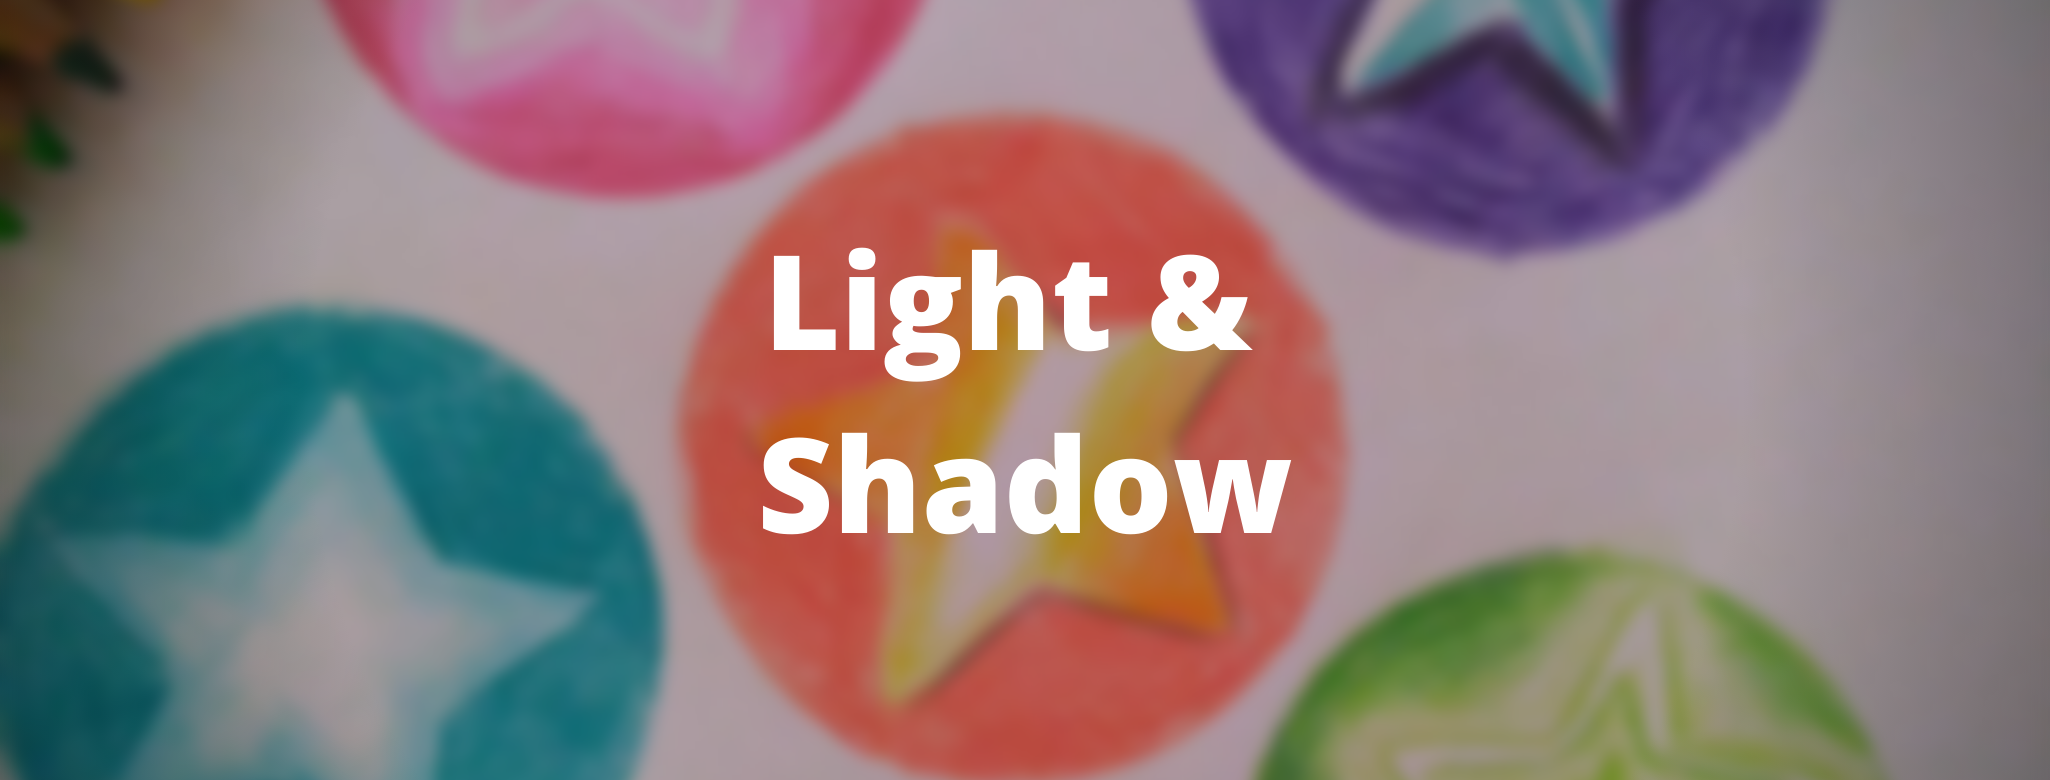 Light & Shadow workshop & meditation